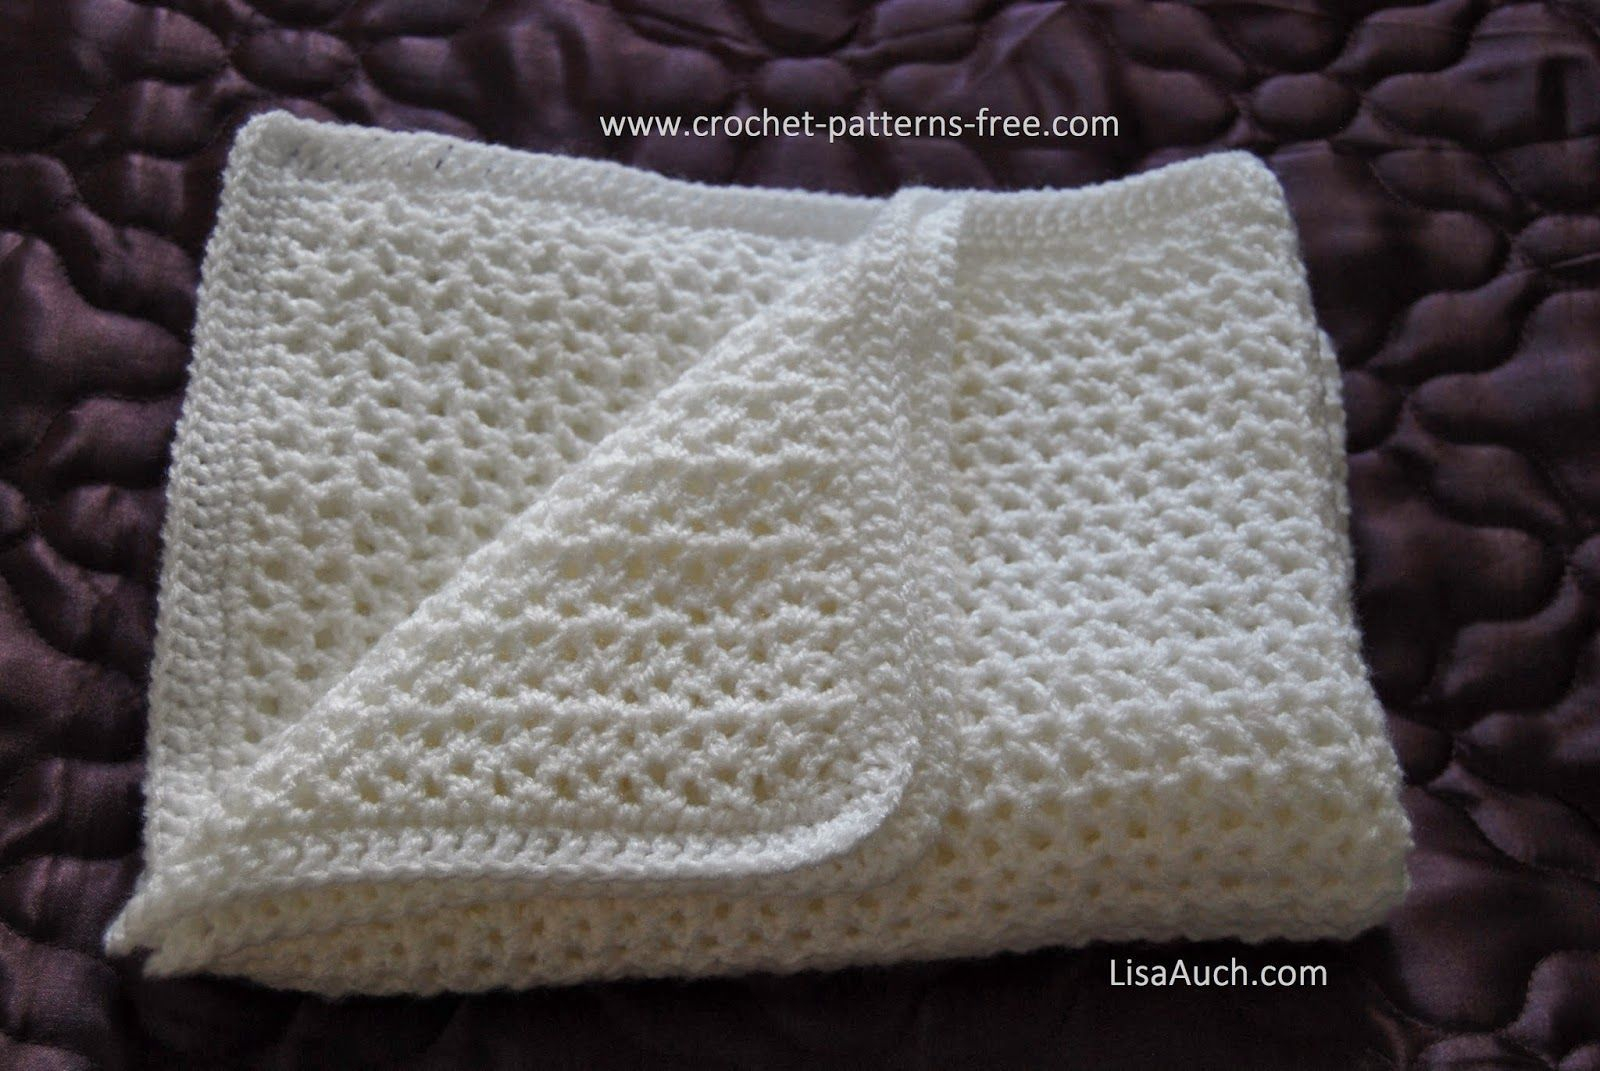 Easy Baby Blanket Crochet Patterns For Beginners How To Crochet An Easy Ba Blanket Ideal For Beginners Free